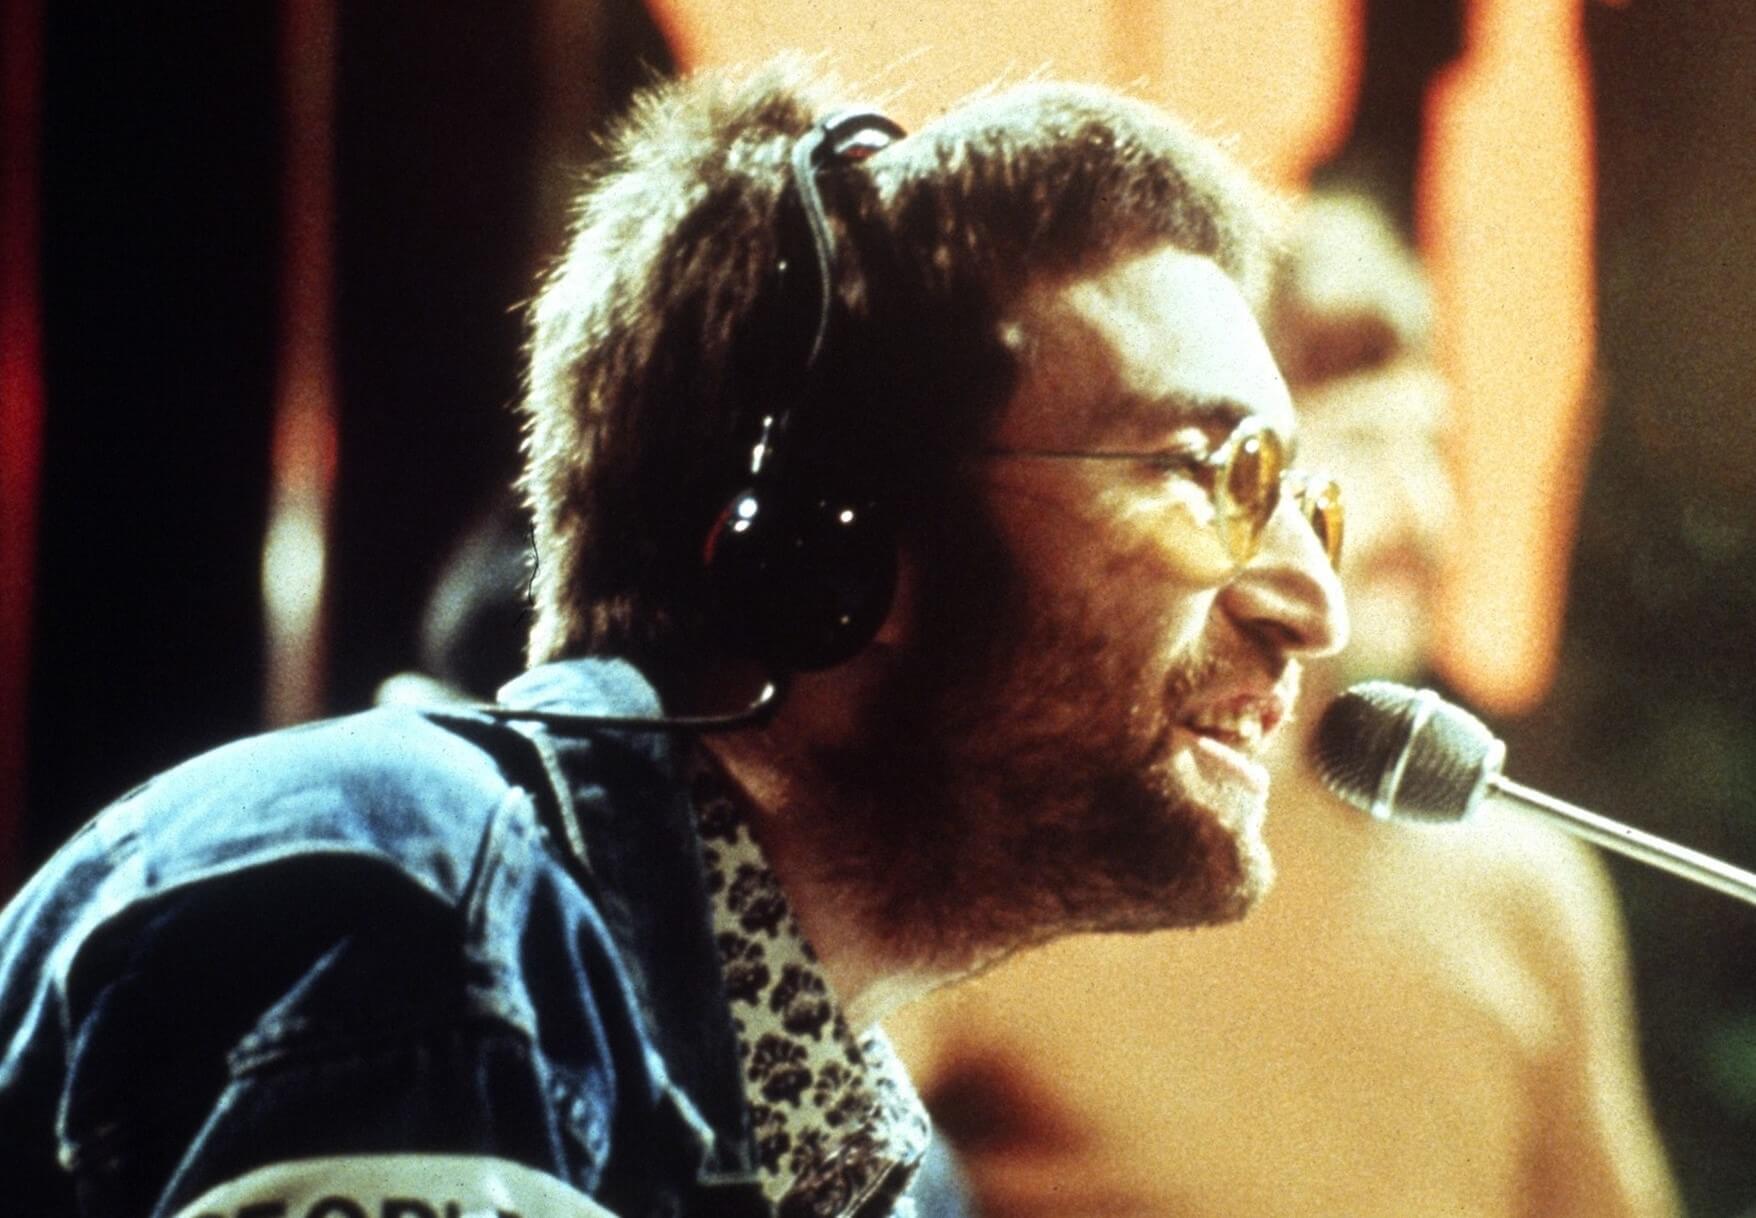 "Imagine" singer John Lennon with a microphone